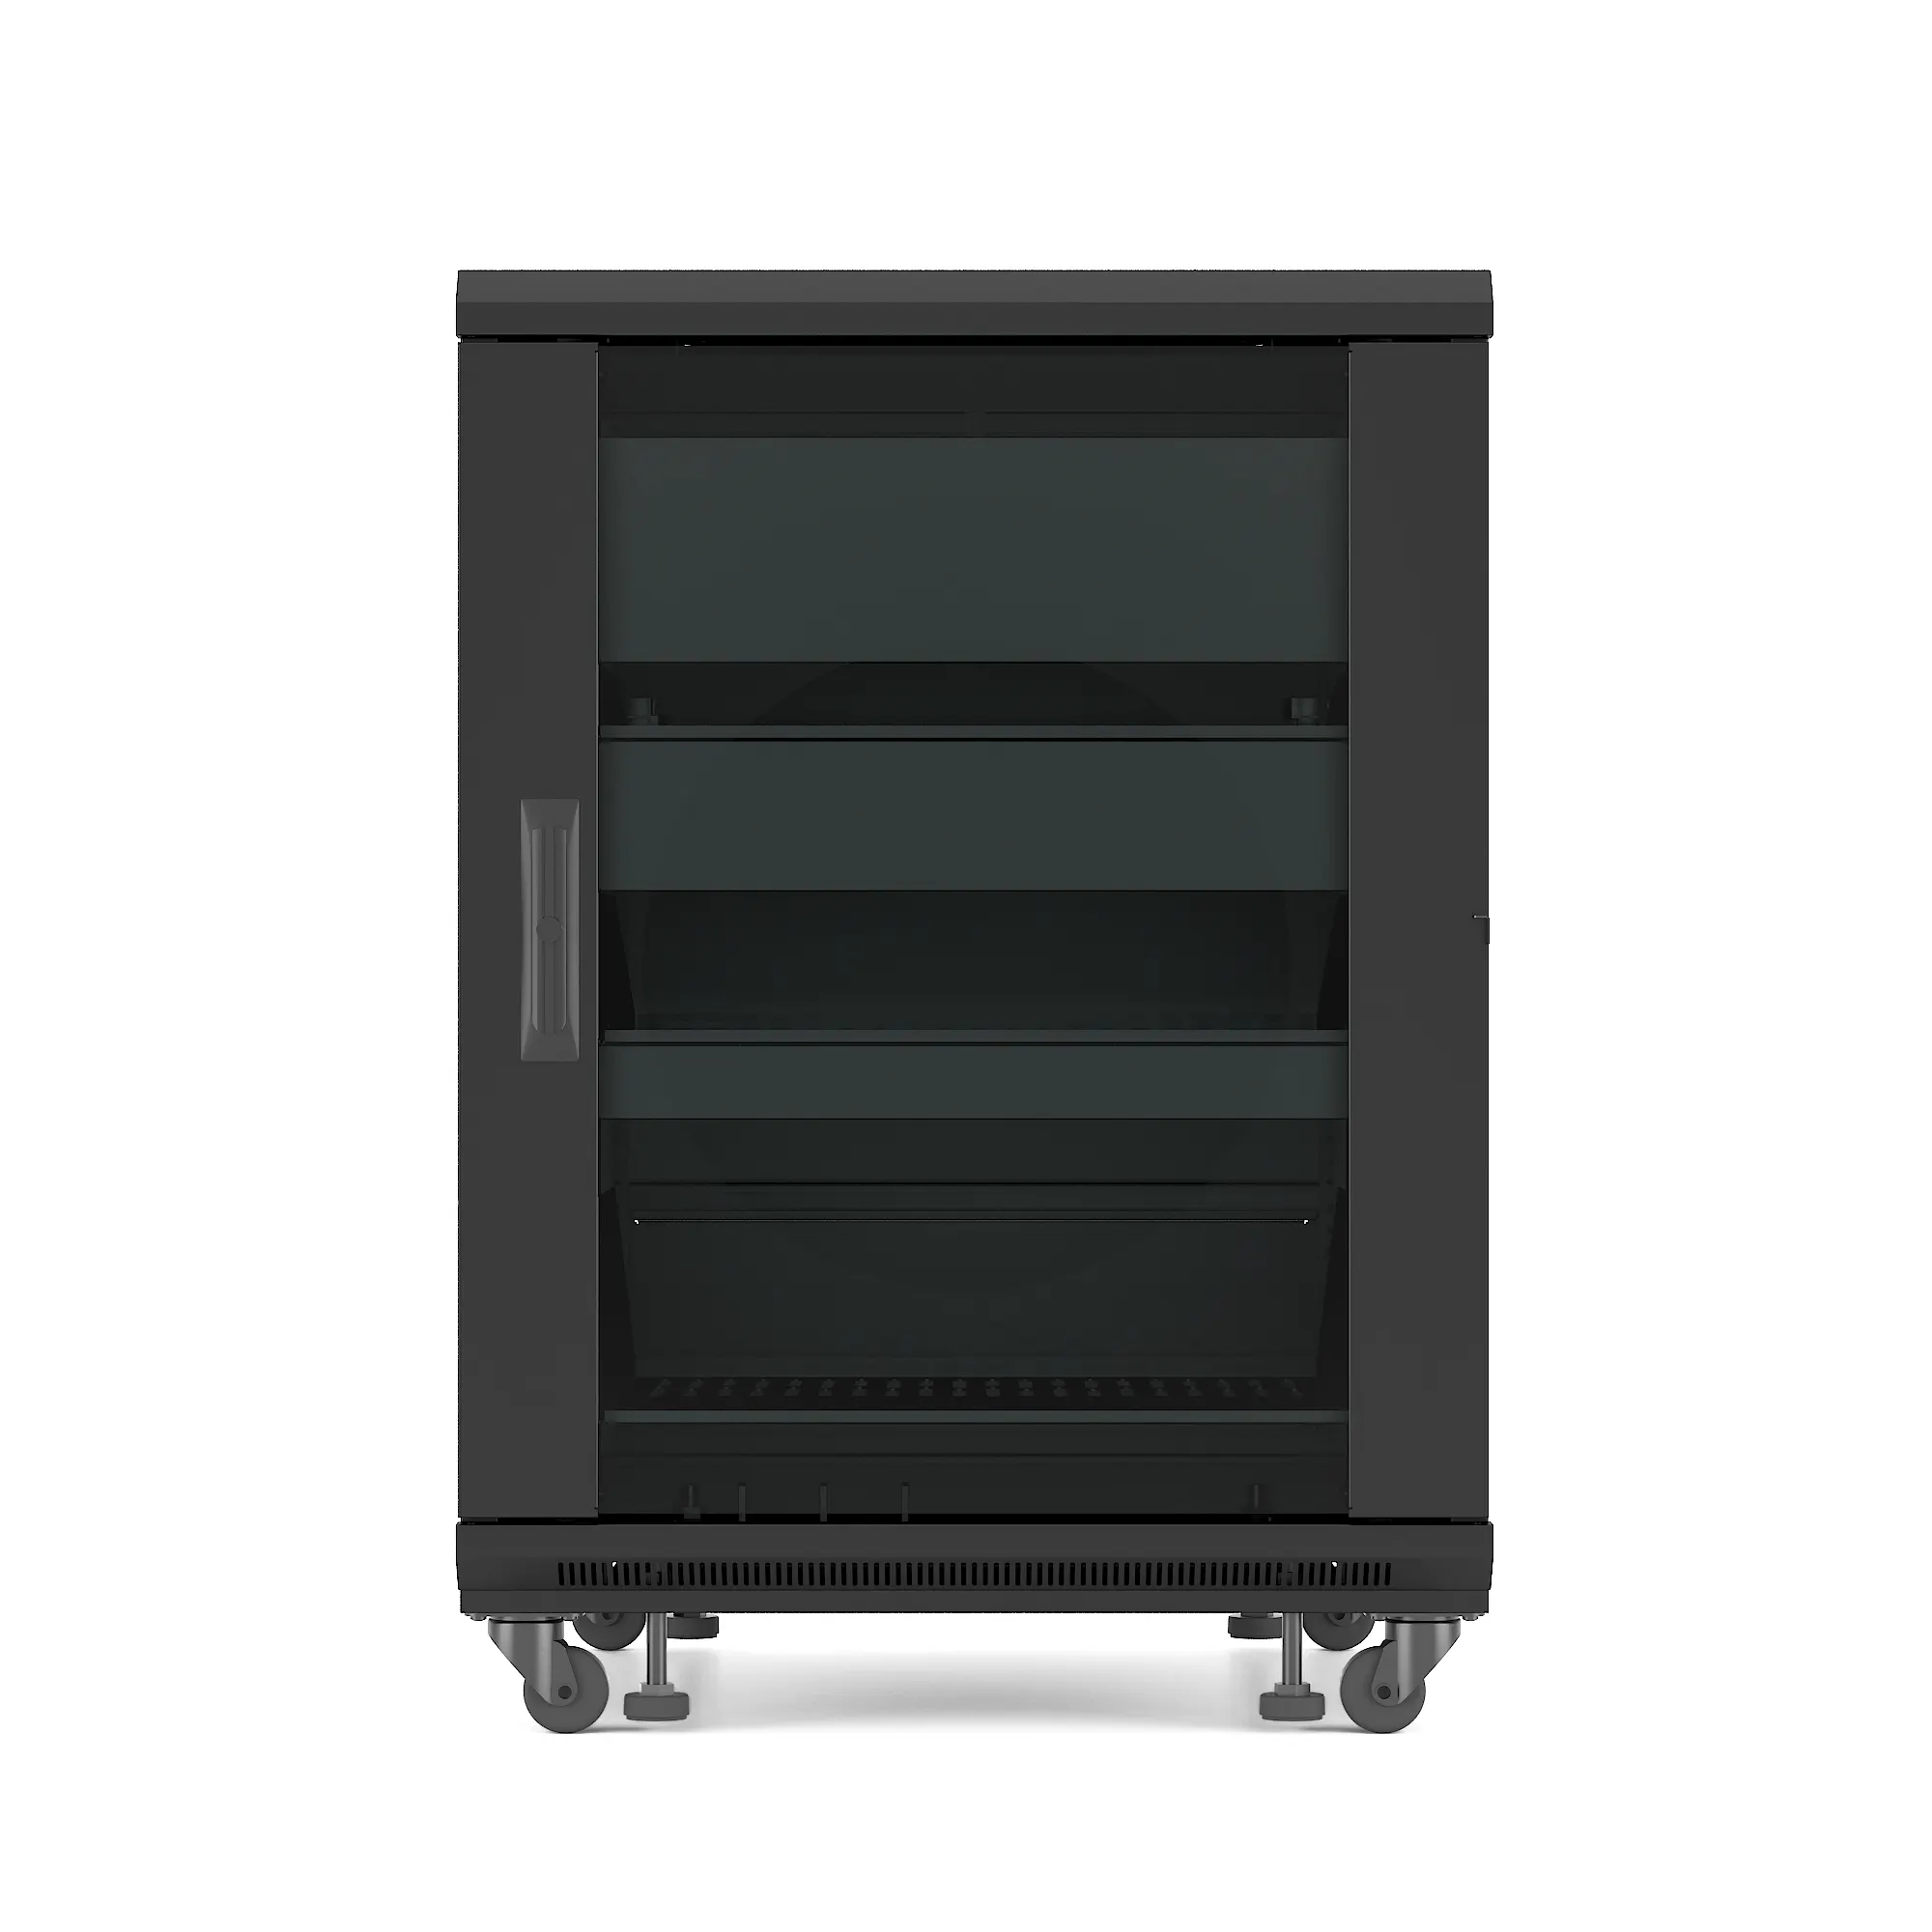 Cold Rolled Steel High Quality Data Rack Enclosure Cabinet 20u Network Cabinet Server Rack